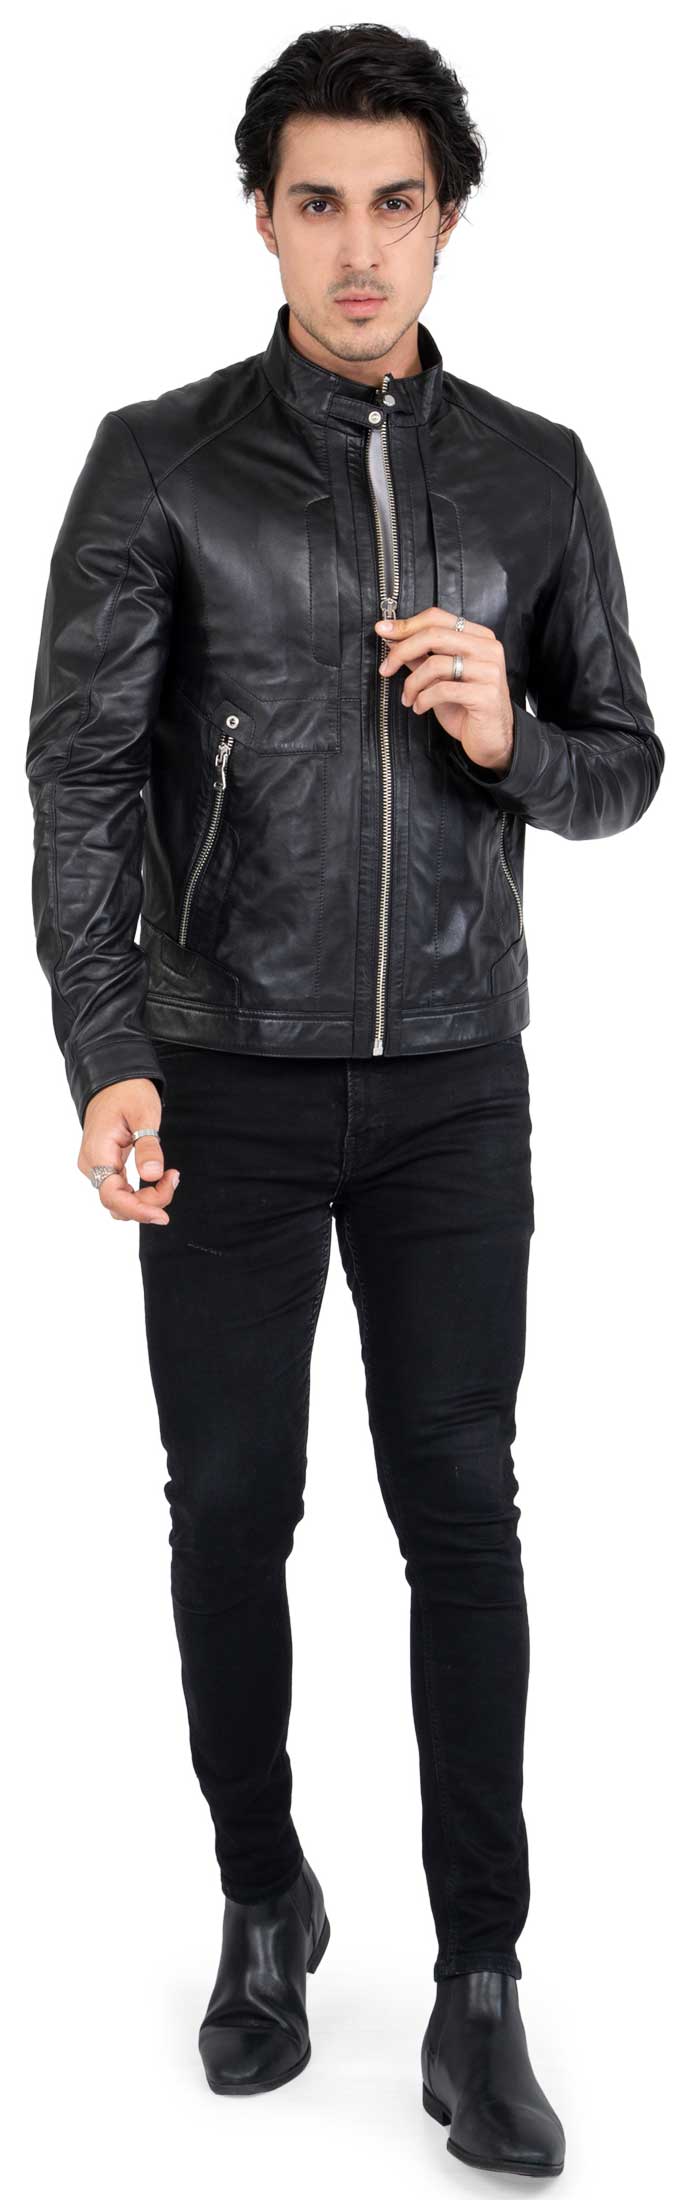 Lamb Leather Biker Jacket for Men with Four Pockets Regular Fit - B209 ...